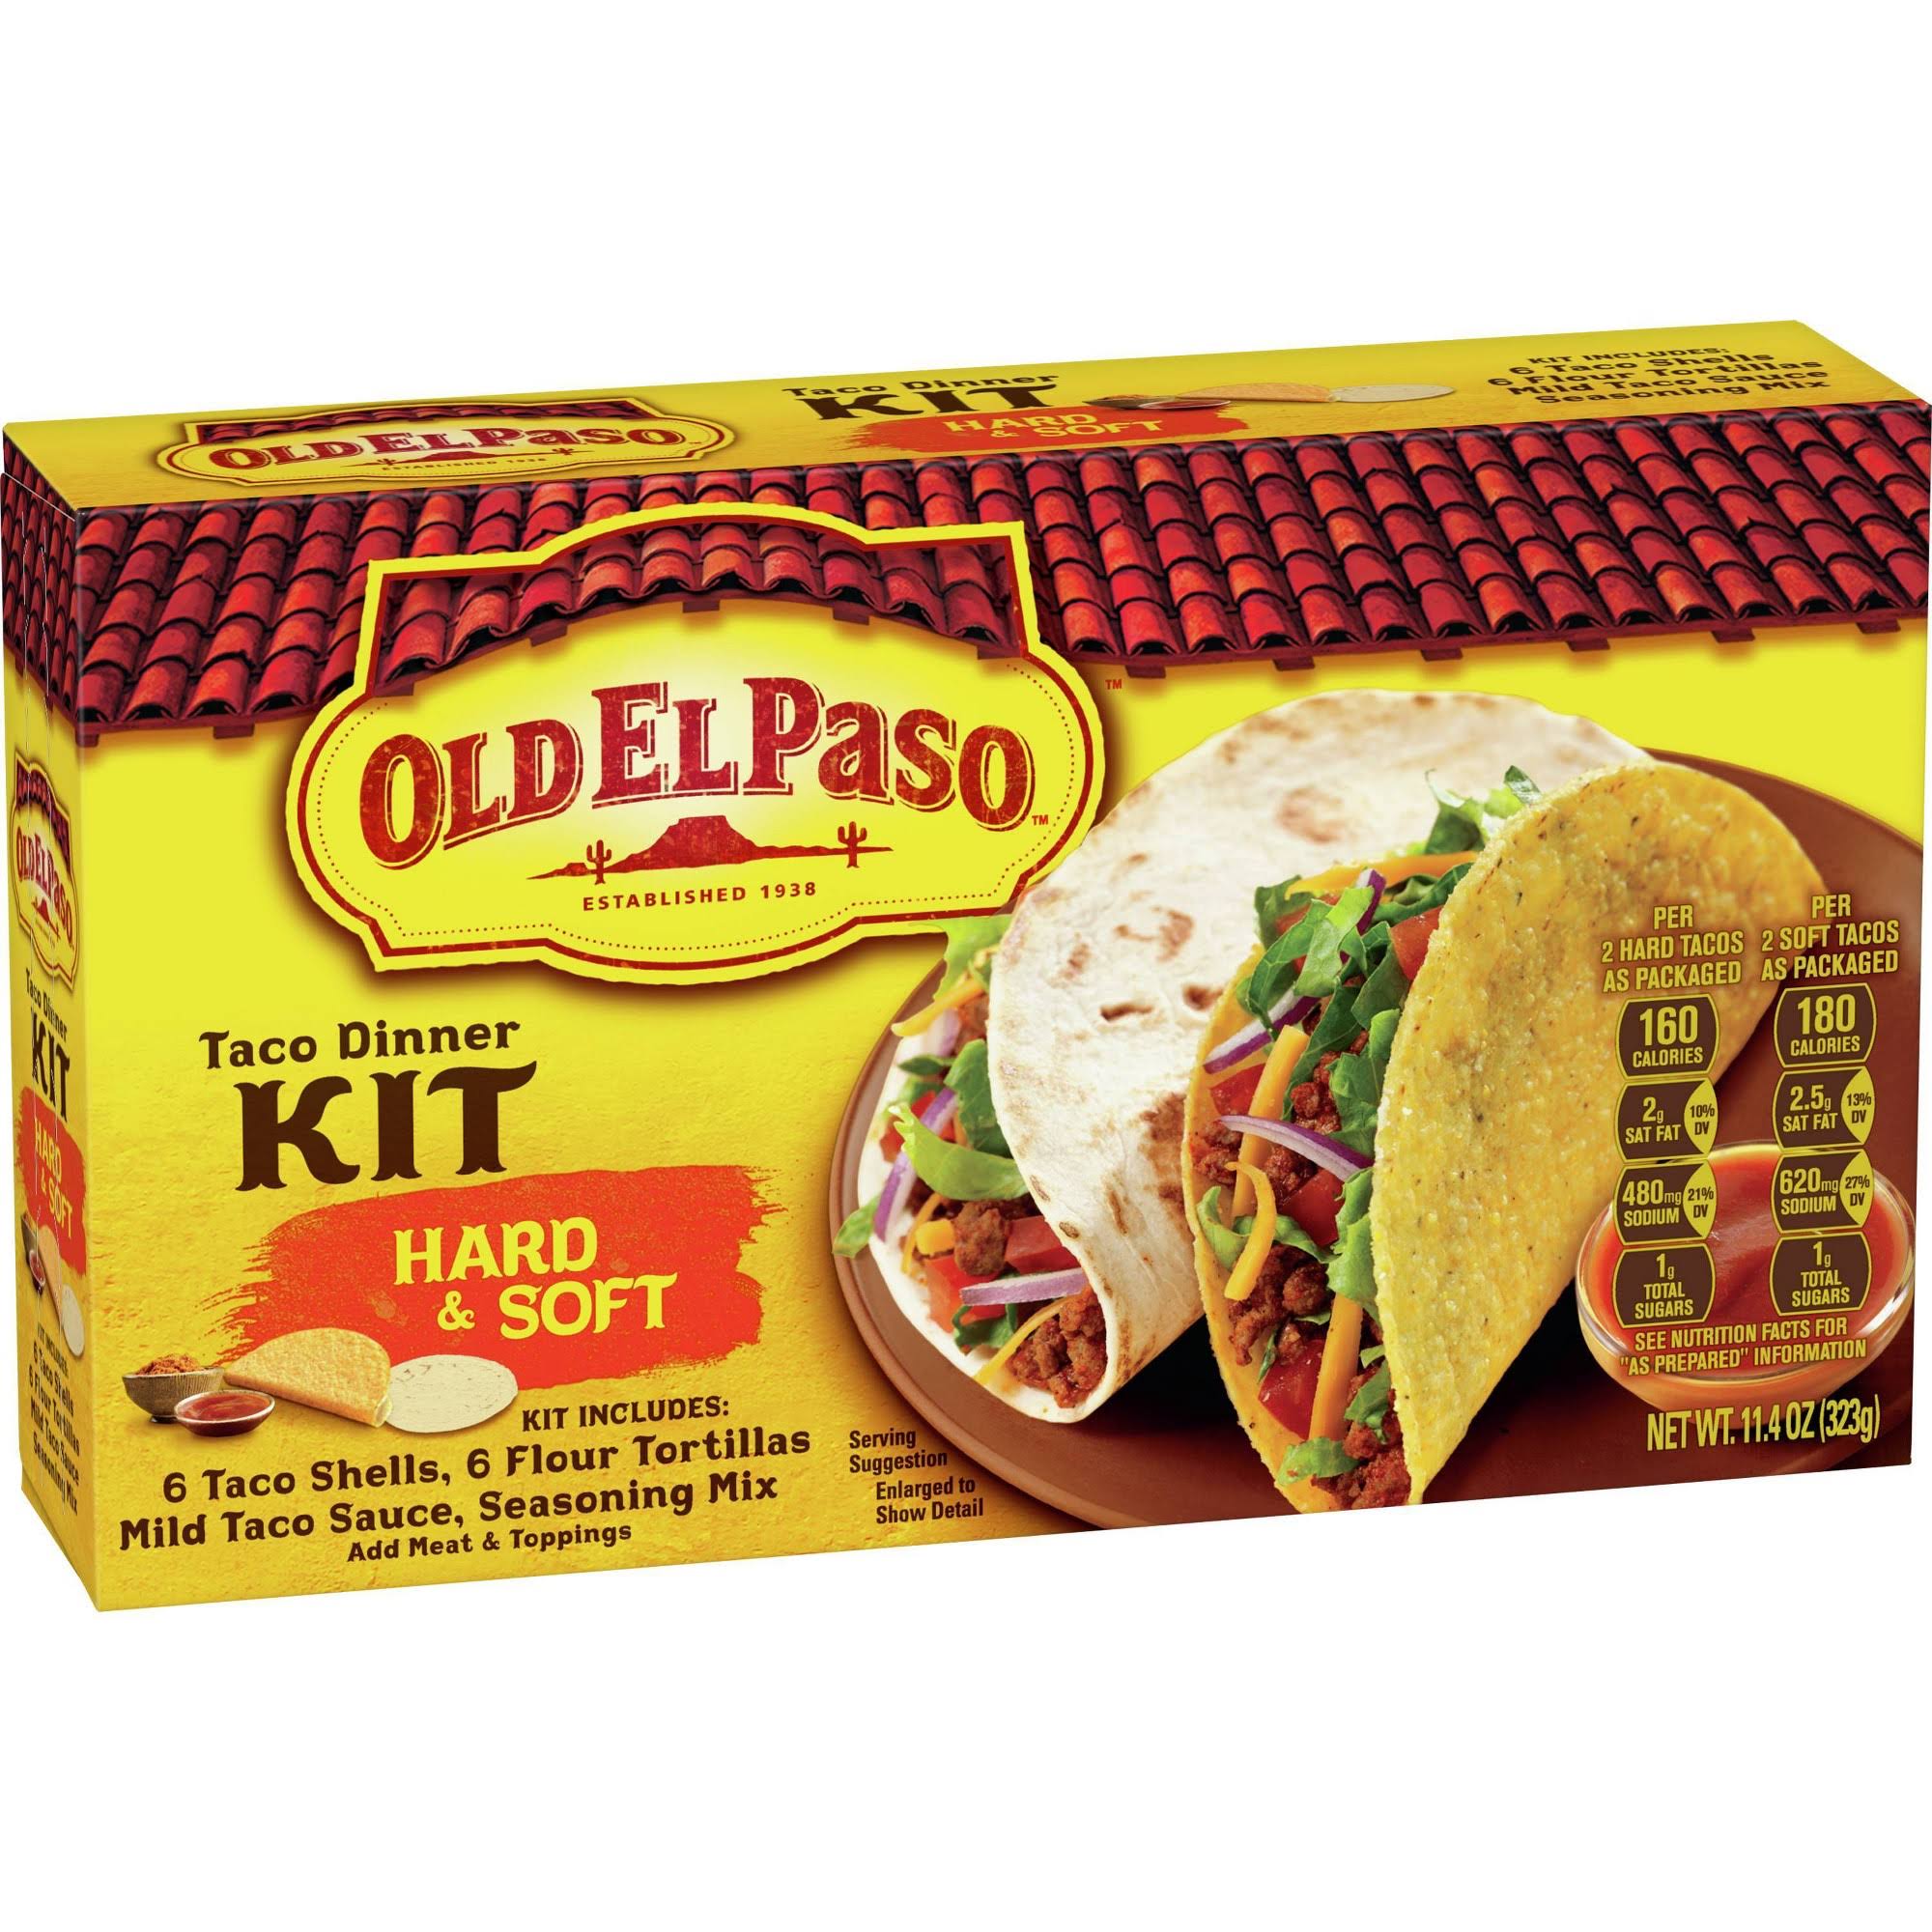 Old El Paso Hard and Soft Taco Dinner Kit - 11.4oz, 5pk